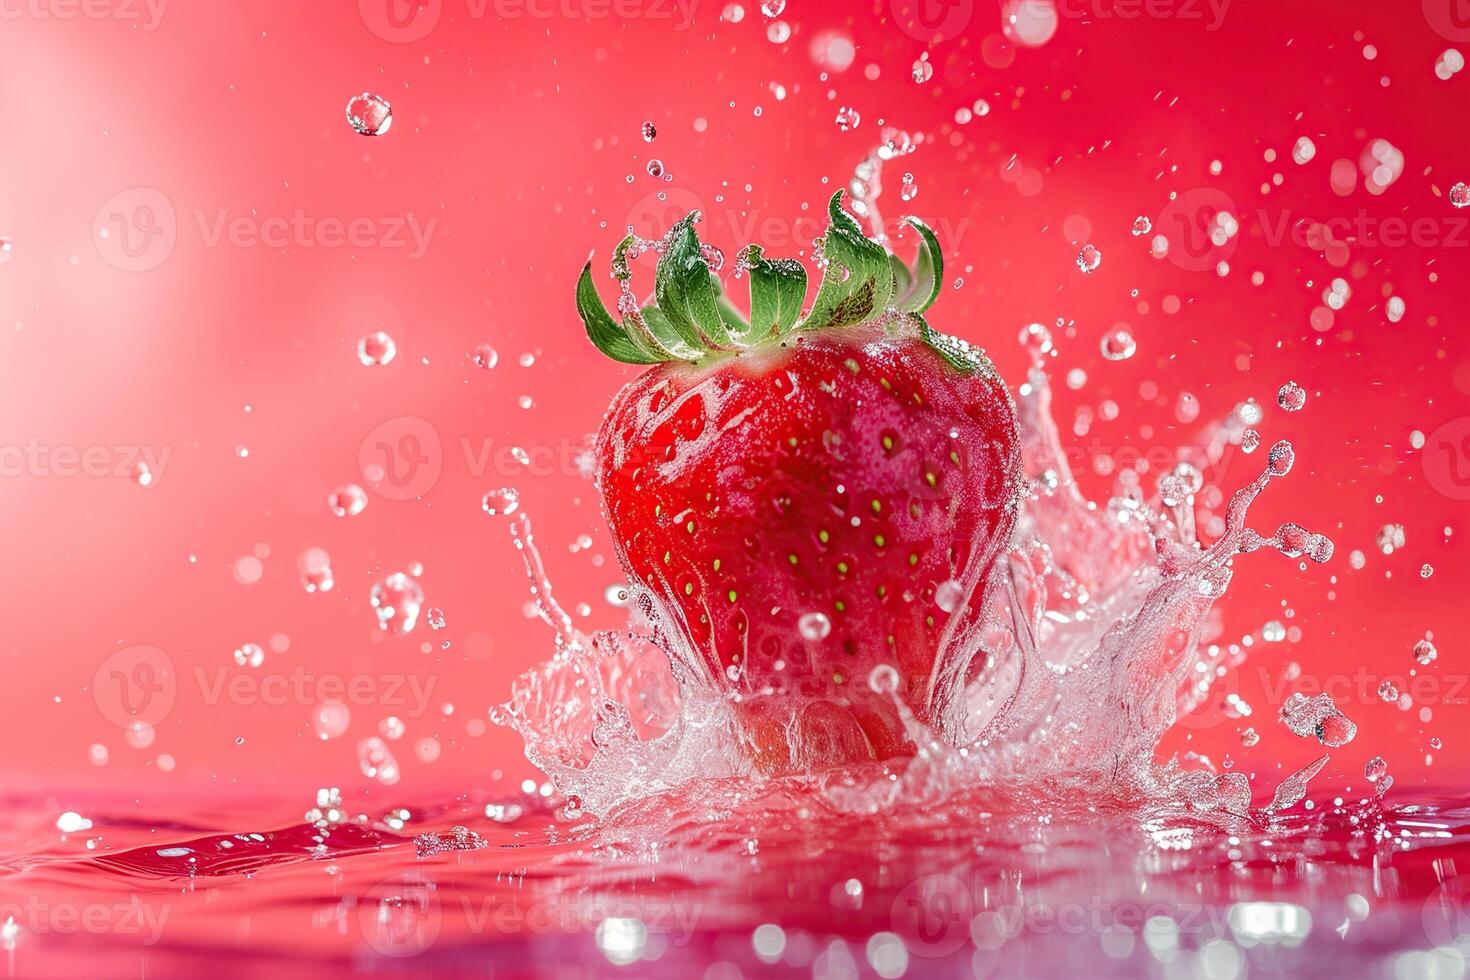 AI generated Powerful liquid, fresh strawberry, photo